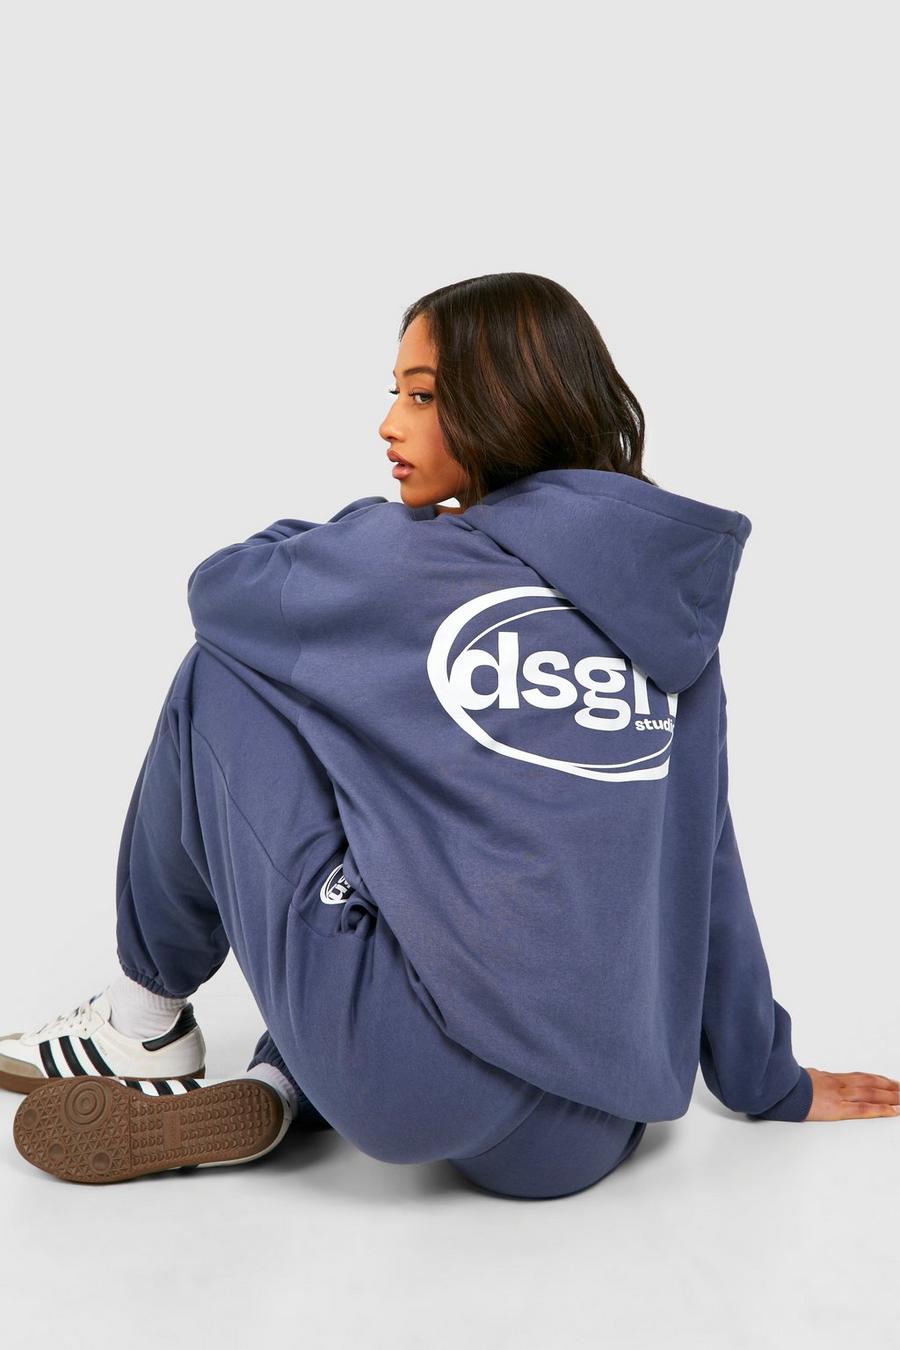 Chándal oversize con capucha y eslogan Dsgn Studio, Blue